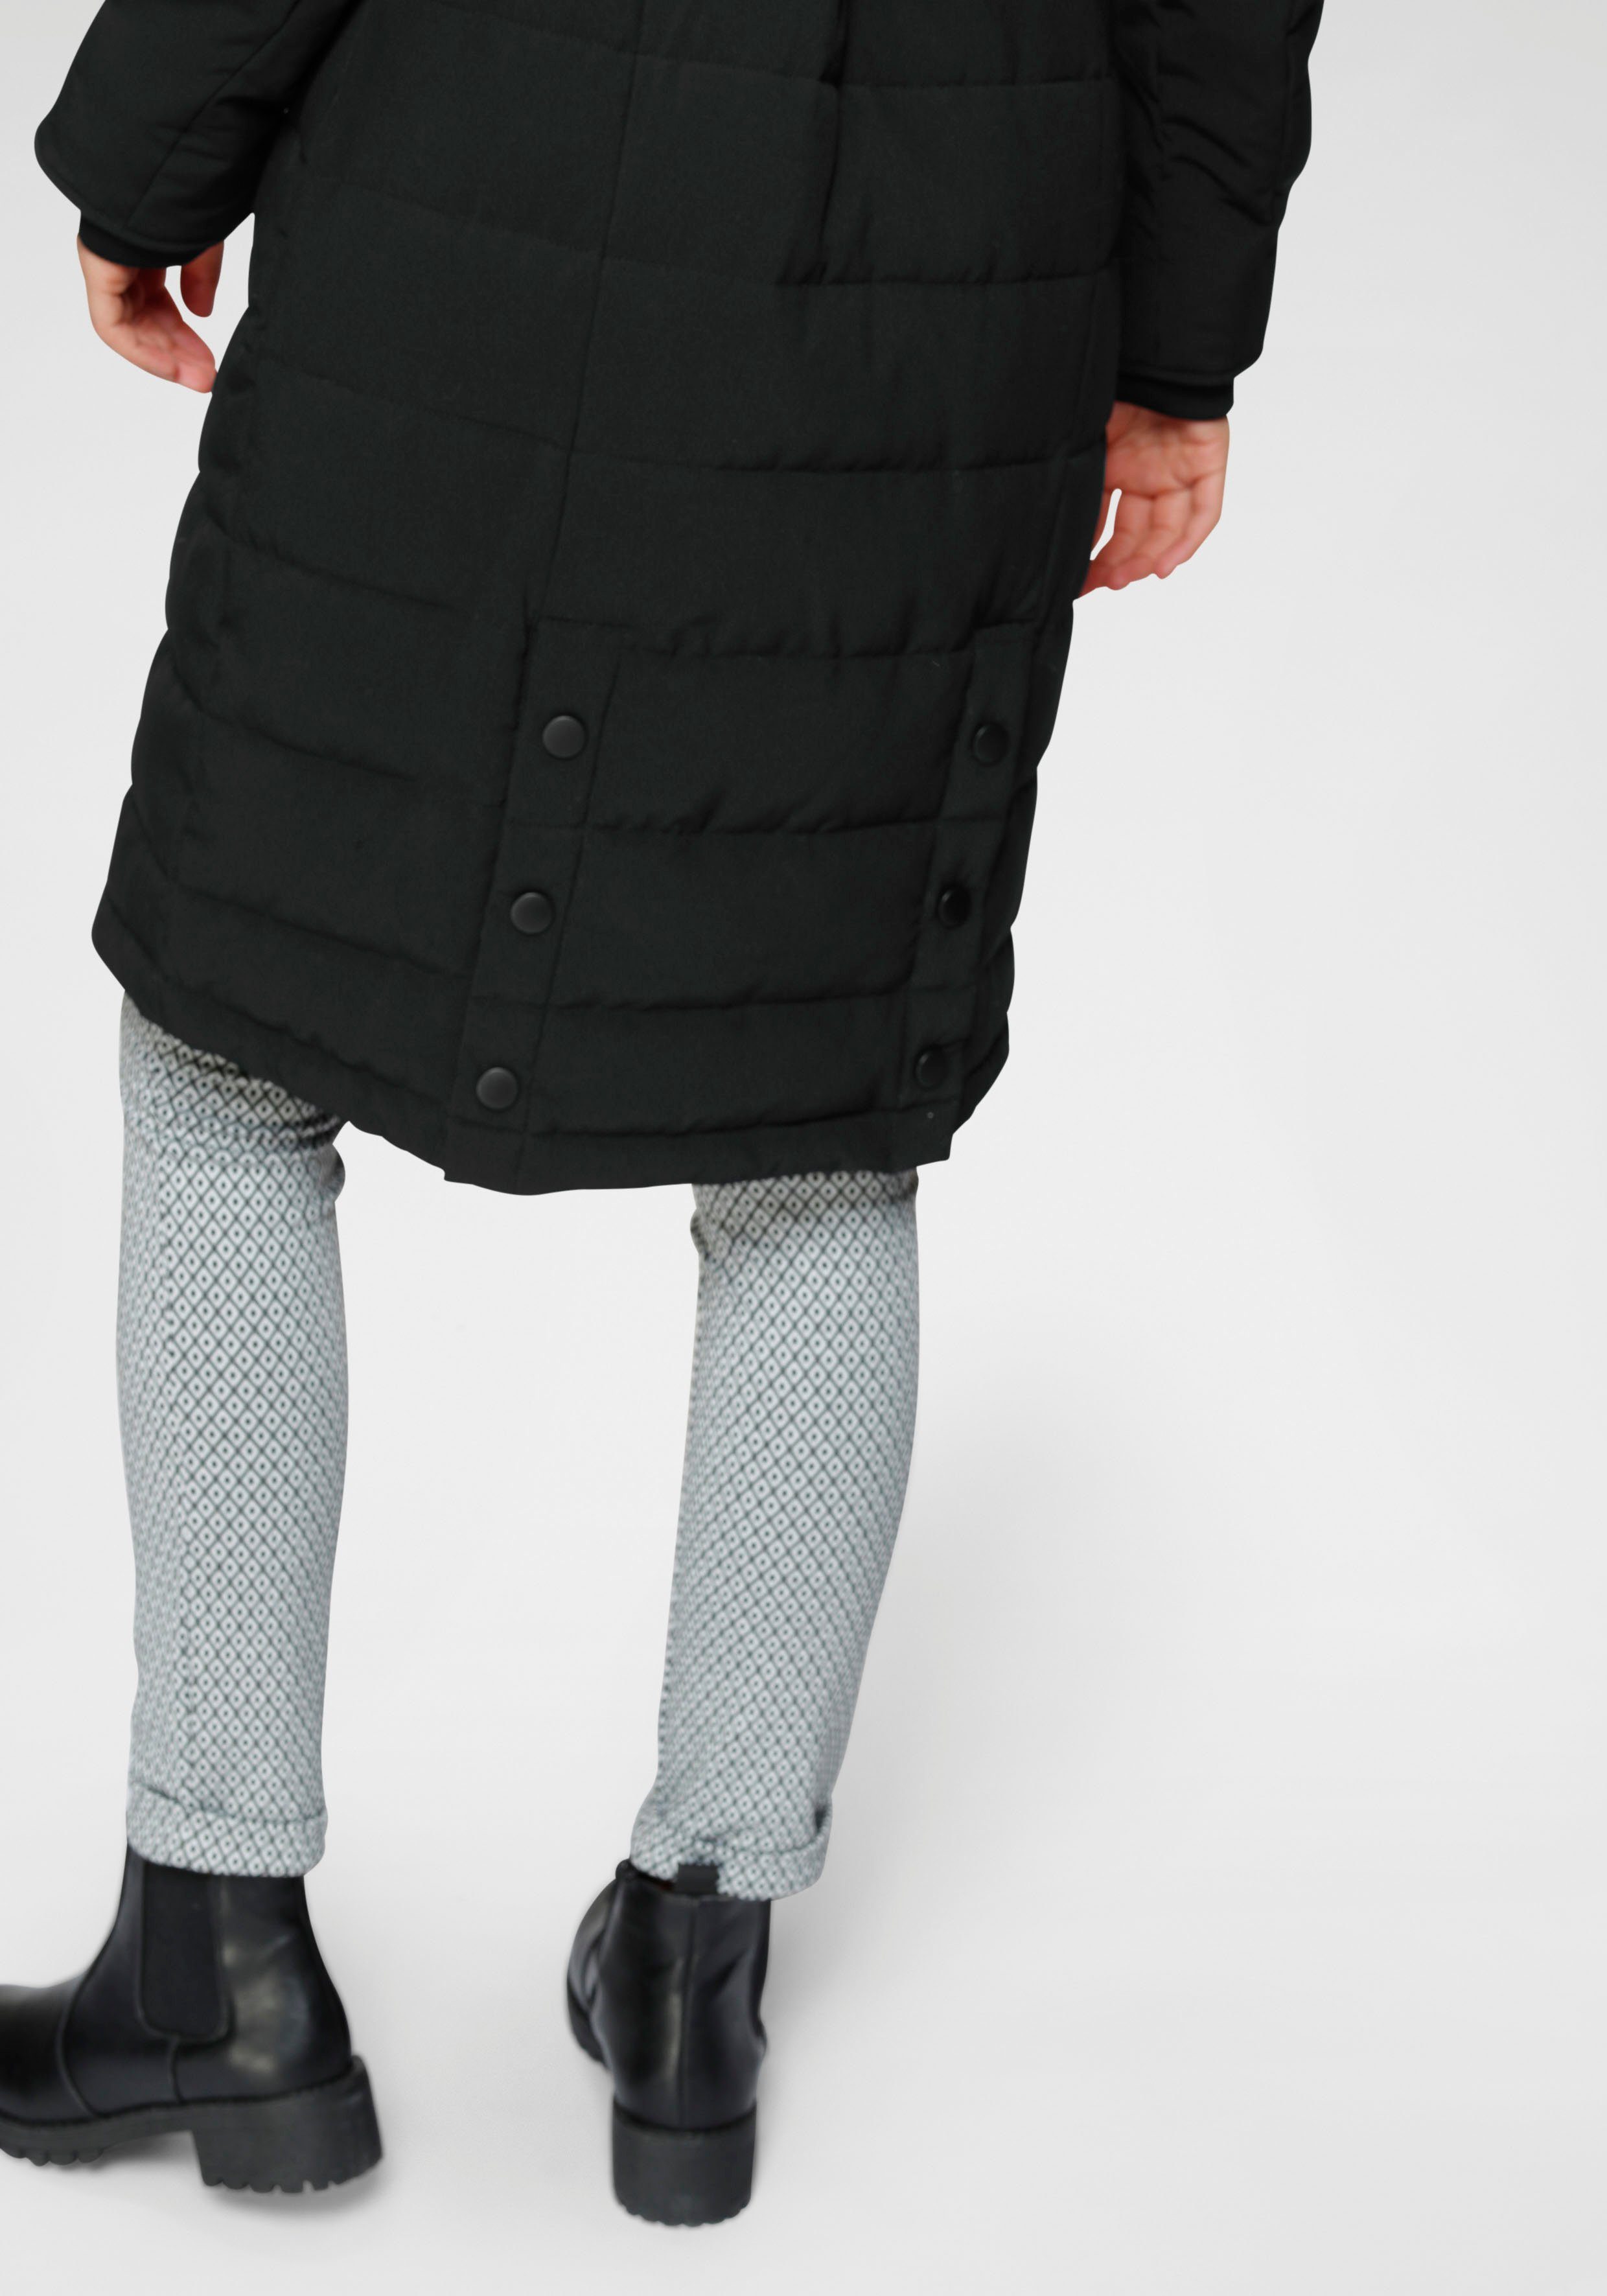 ALPENBLITZ Steppmantel Material) nachhaltigem Kuschel-Kapuze abnehmbarer Gürtel & aus long (Jacke dem Mantel black Oslo Markenprägung auf mit